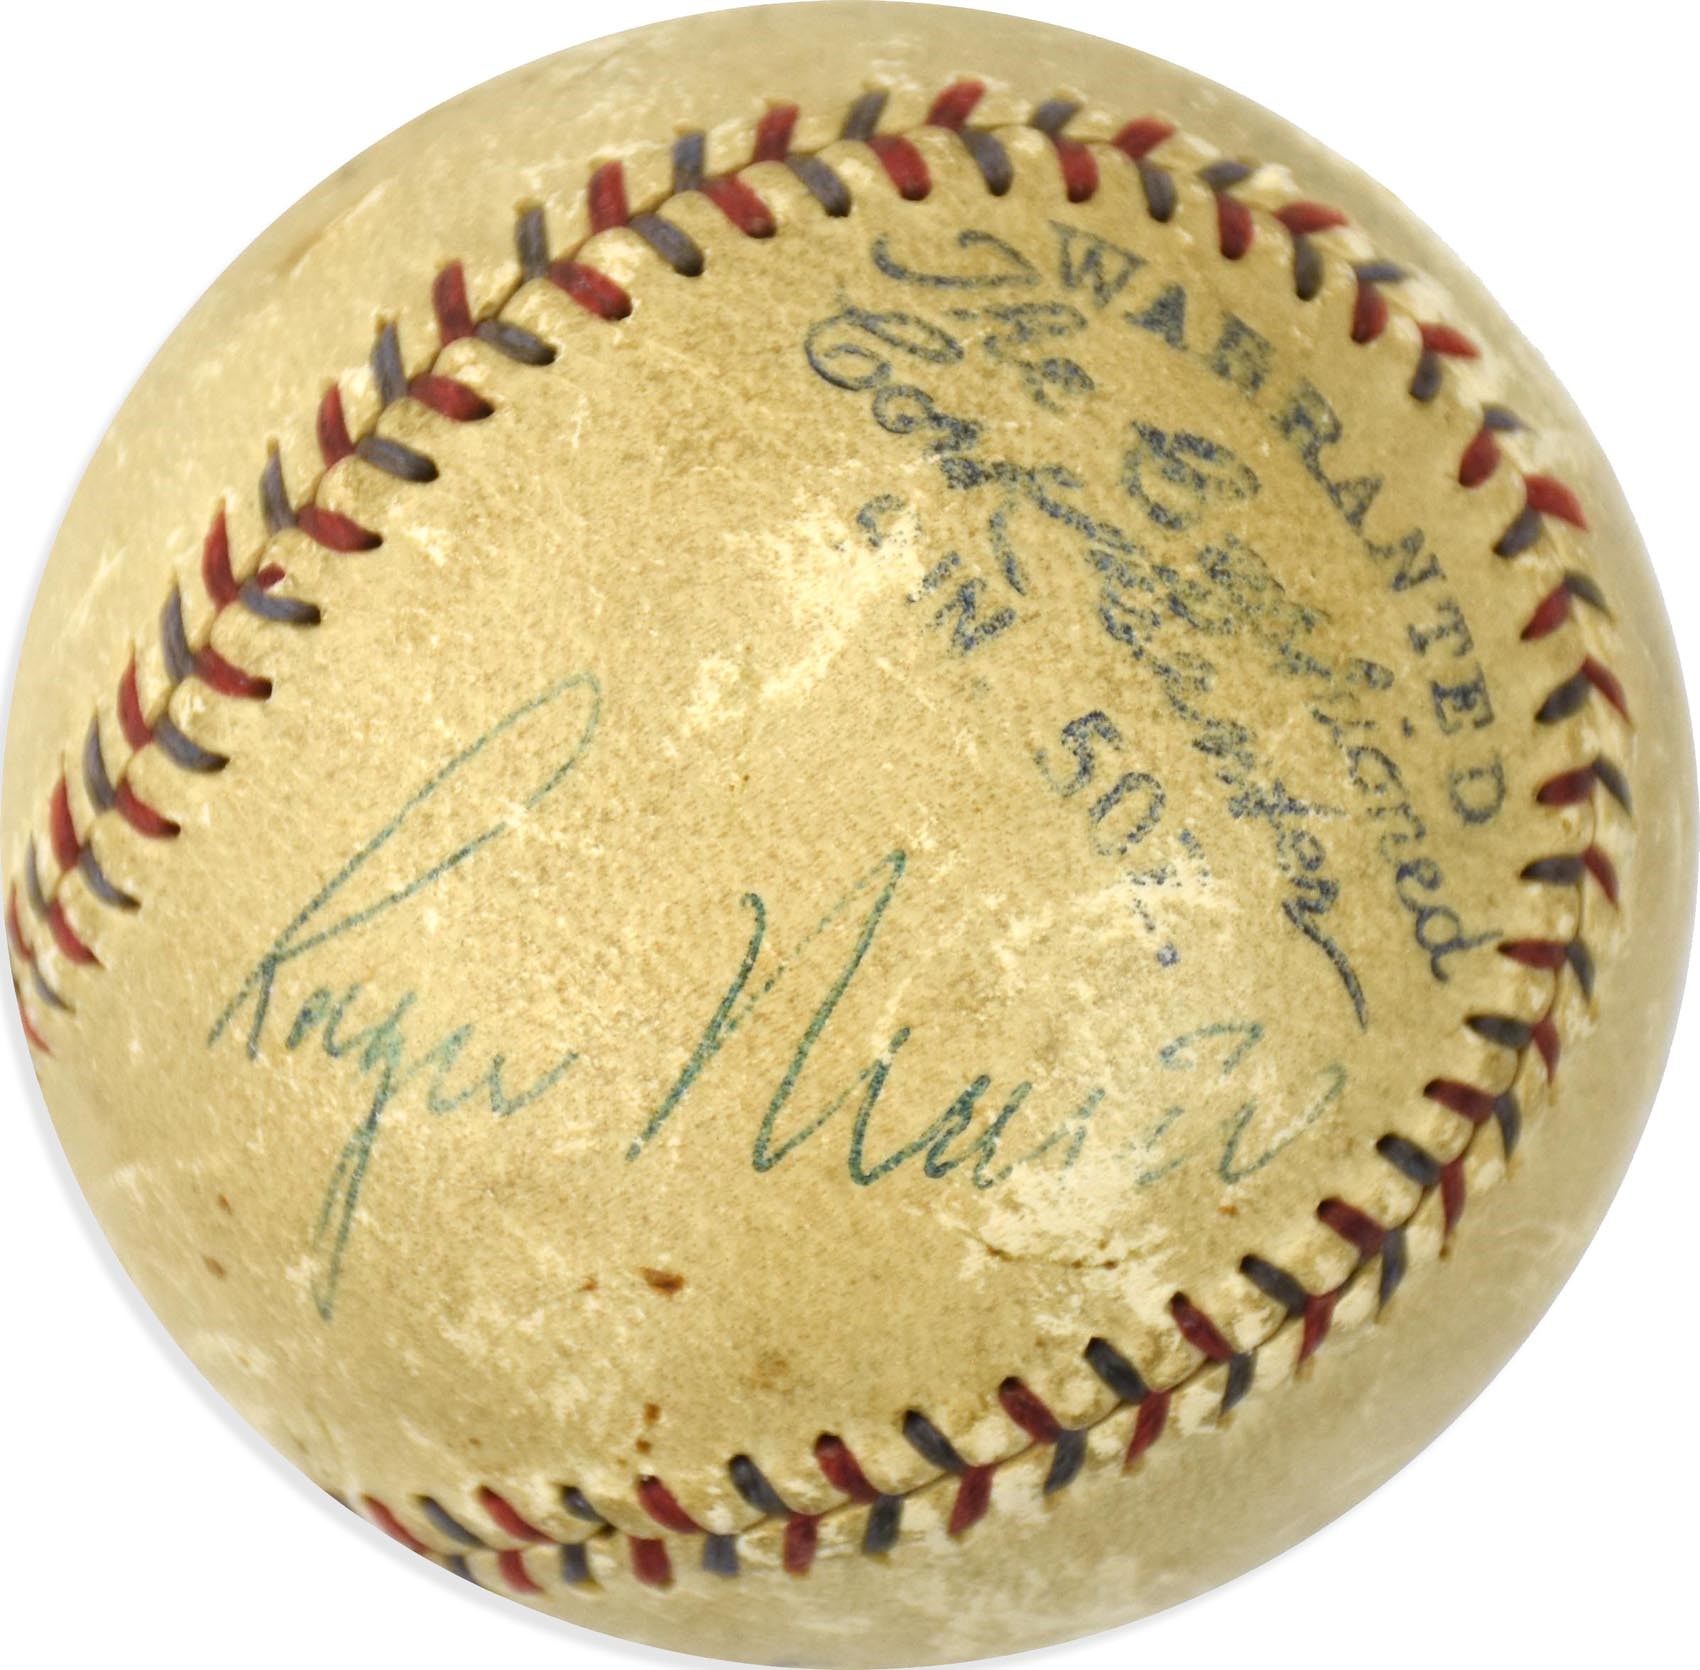 Circa 1961 Roger Maris Signed OAL Reach Baseball